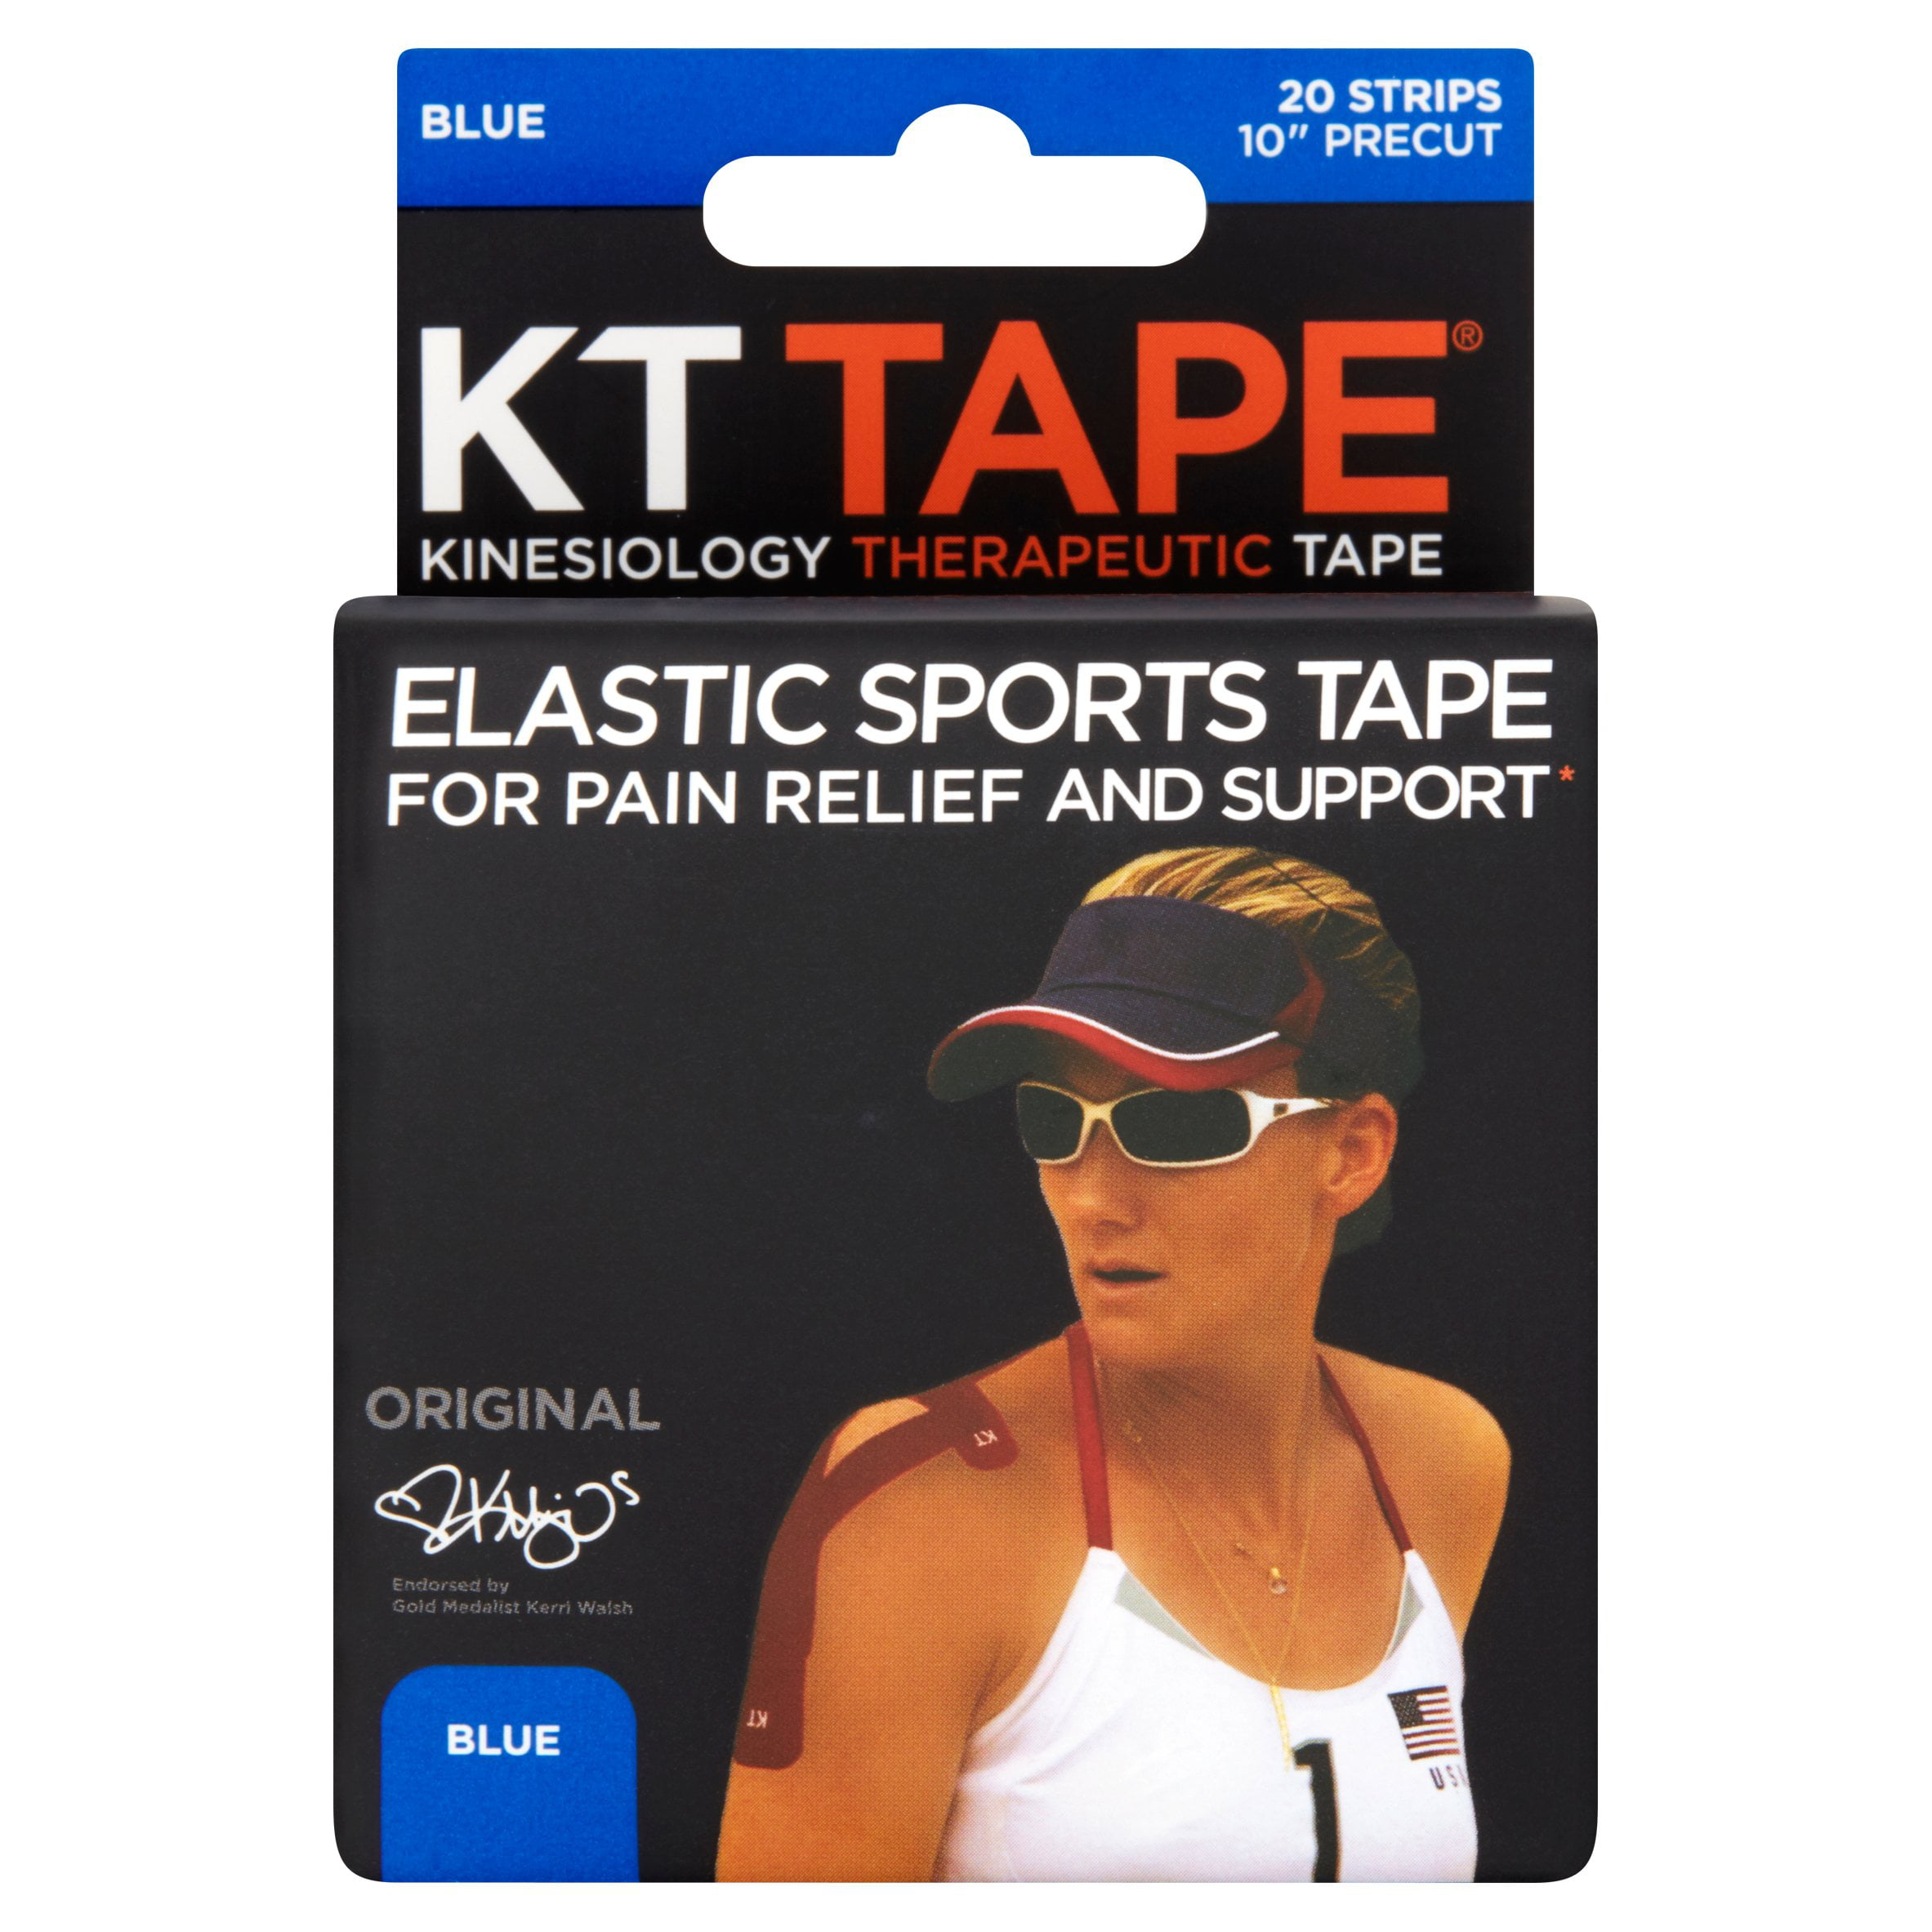 1 Roll of 20 Precut Strips Navy Blue KT Tape Original Cotton Kinesiology Tape 